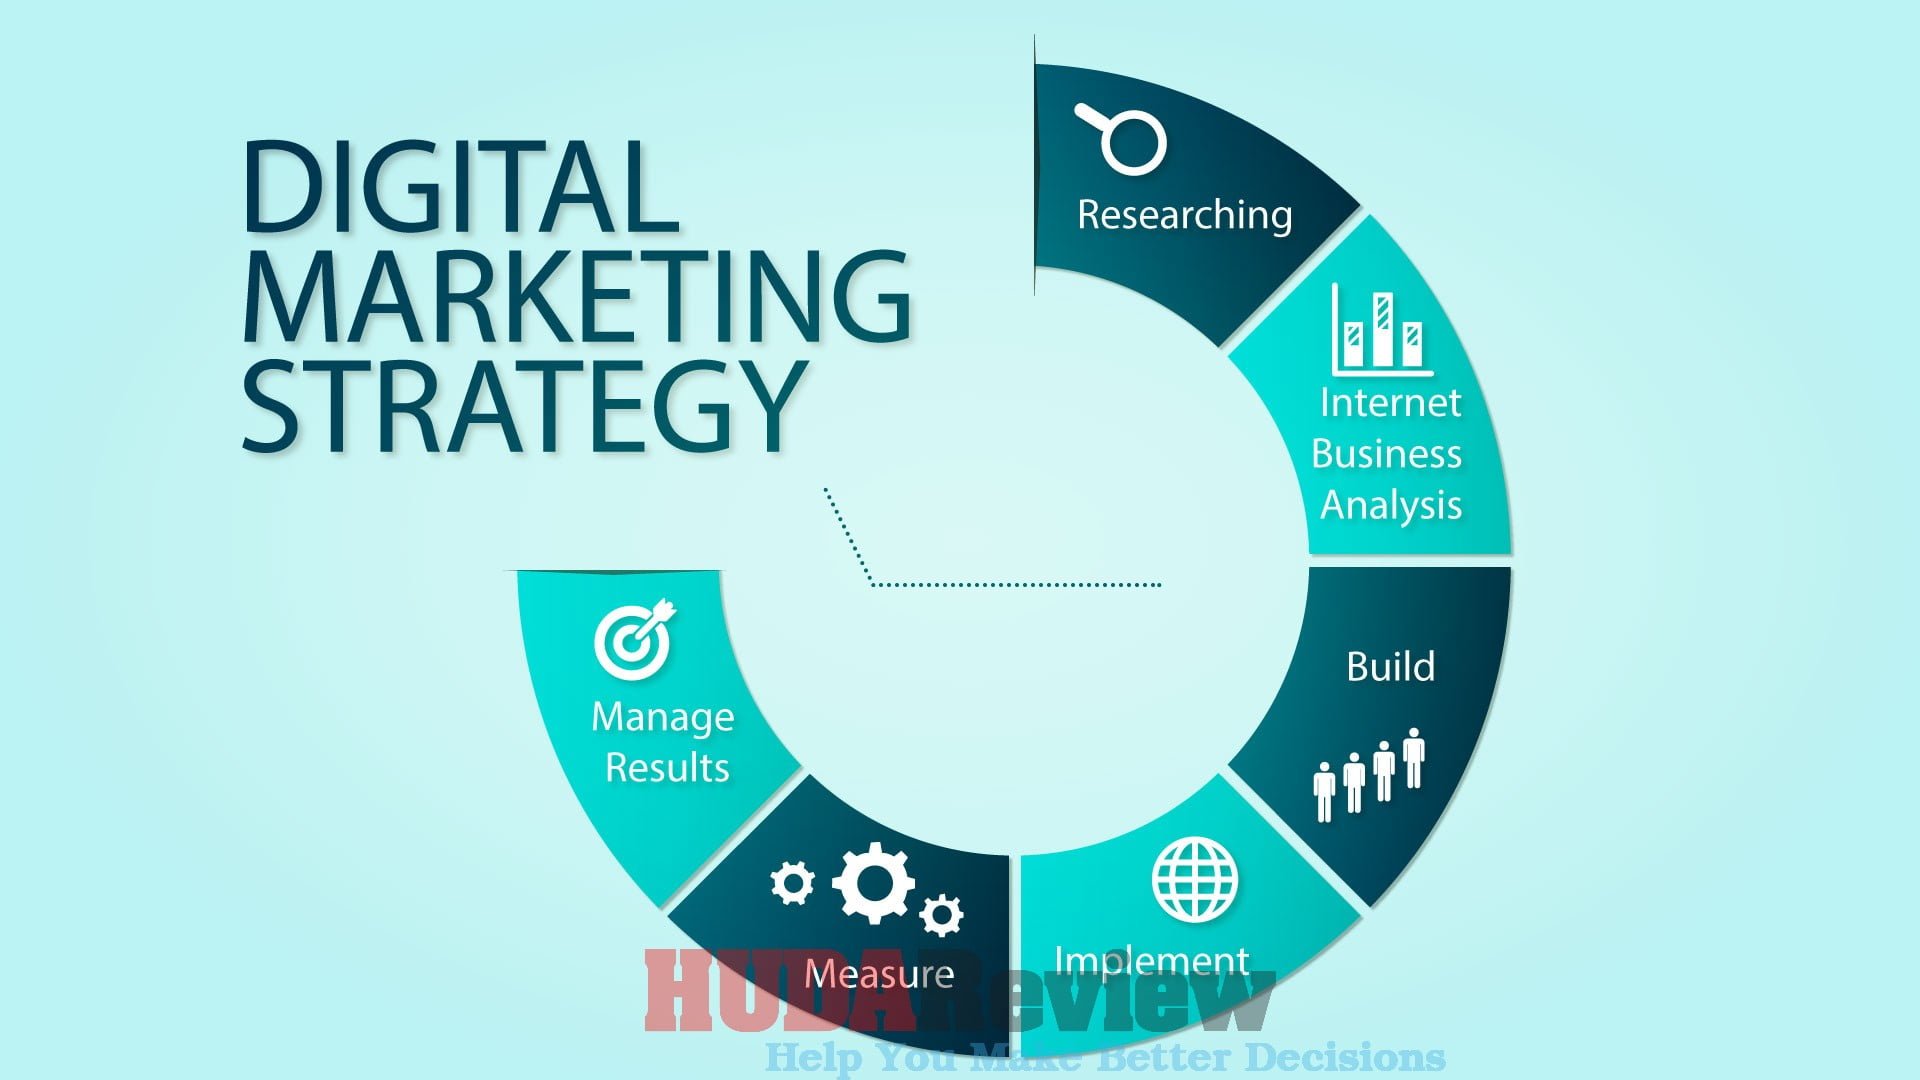 Revealing Digital Marketing Content Trends In 2020